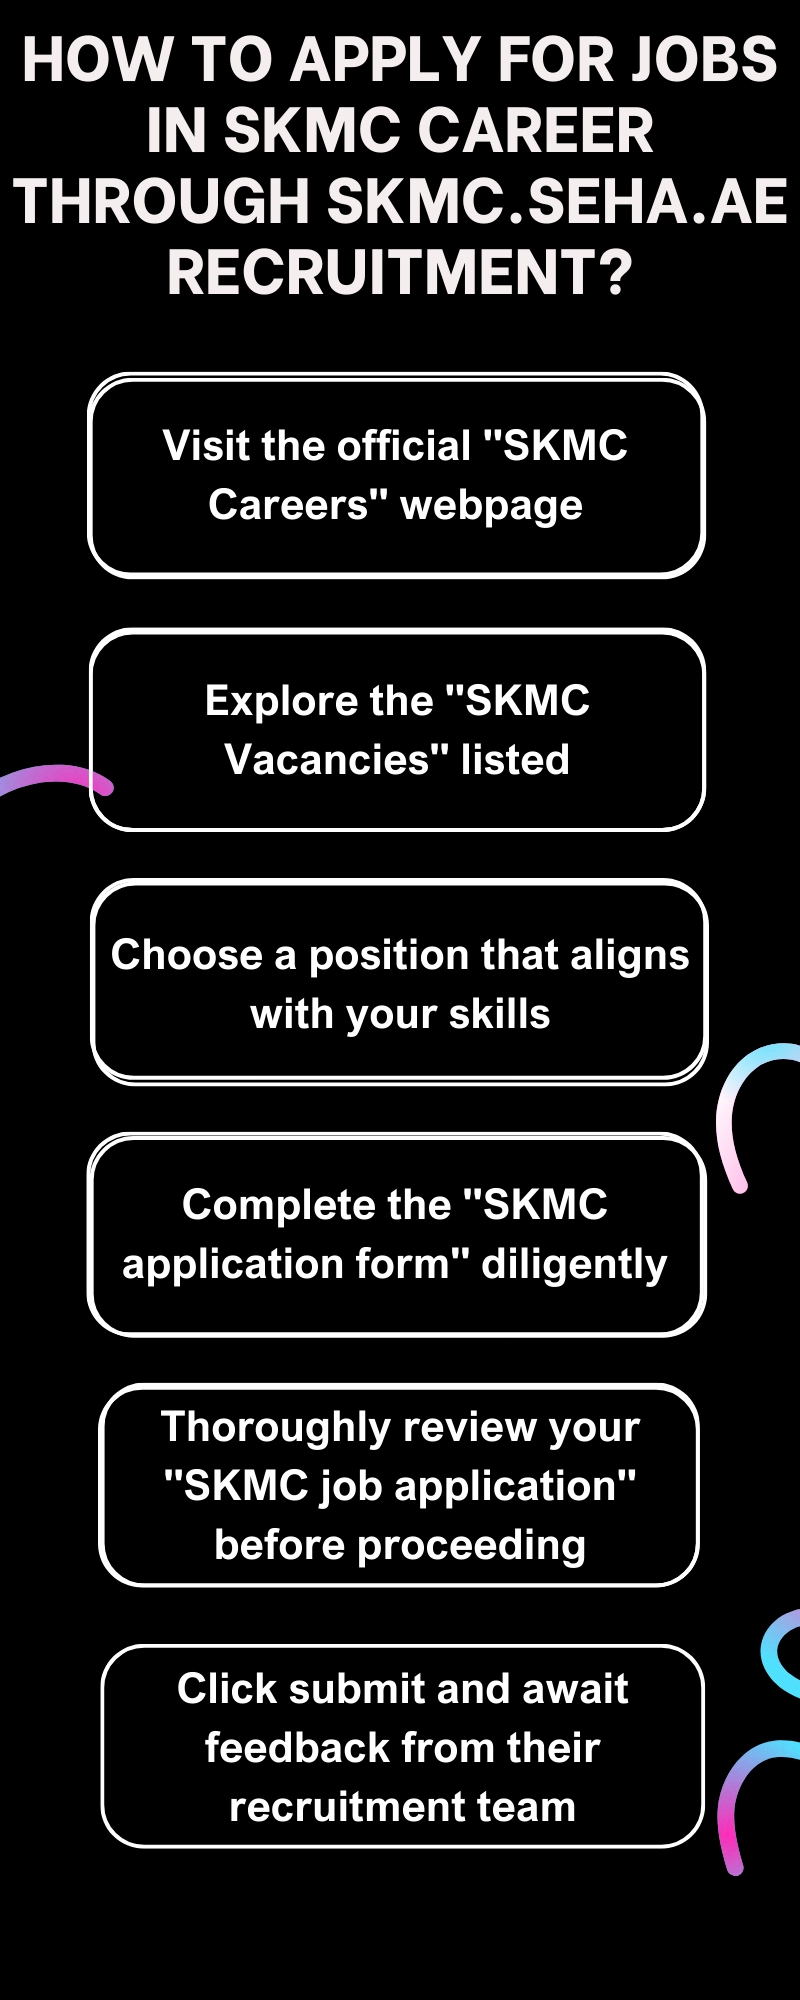 How to Apply for Jobs in SKMC Career through skmc.seha.ae recruitment?